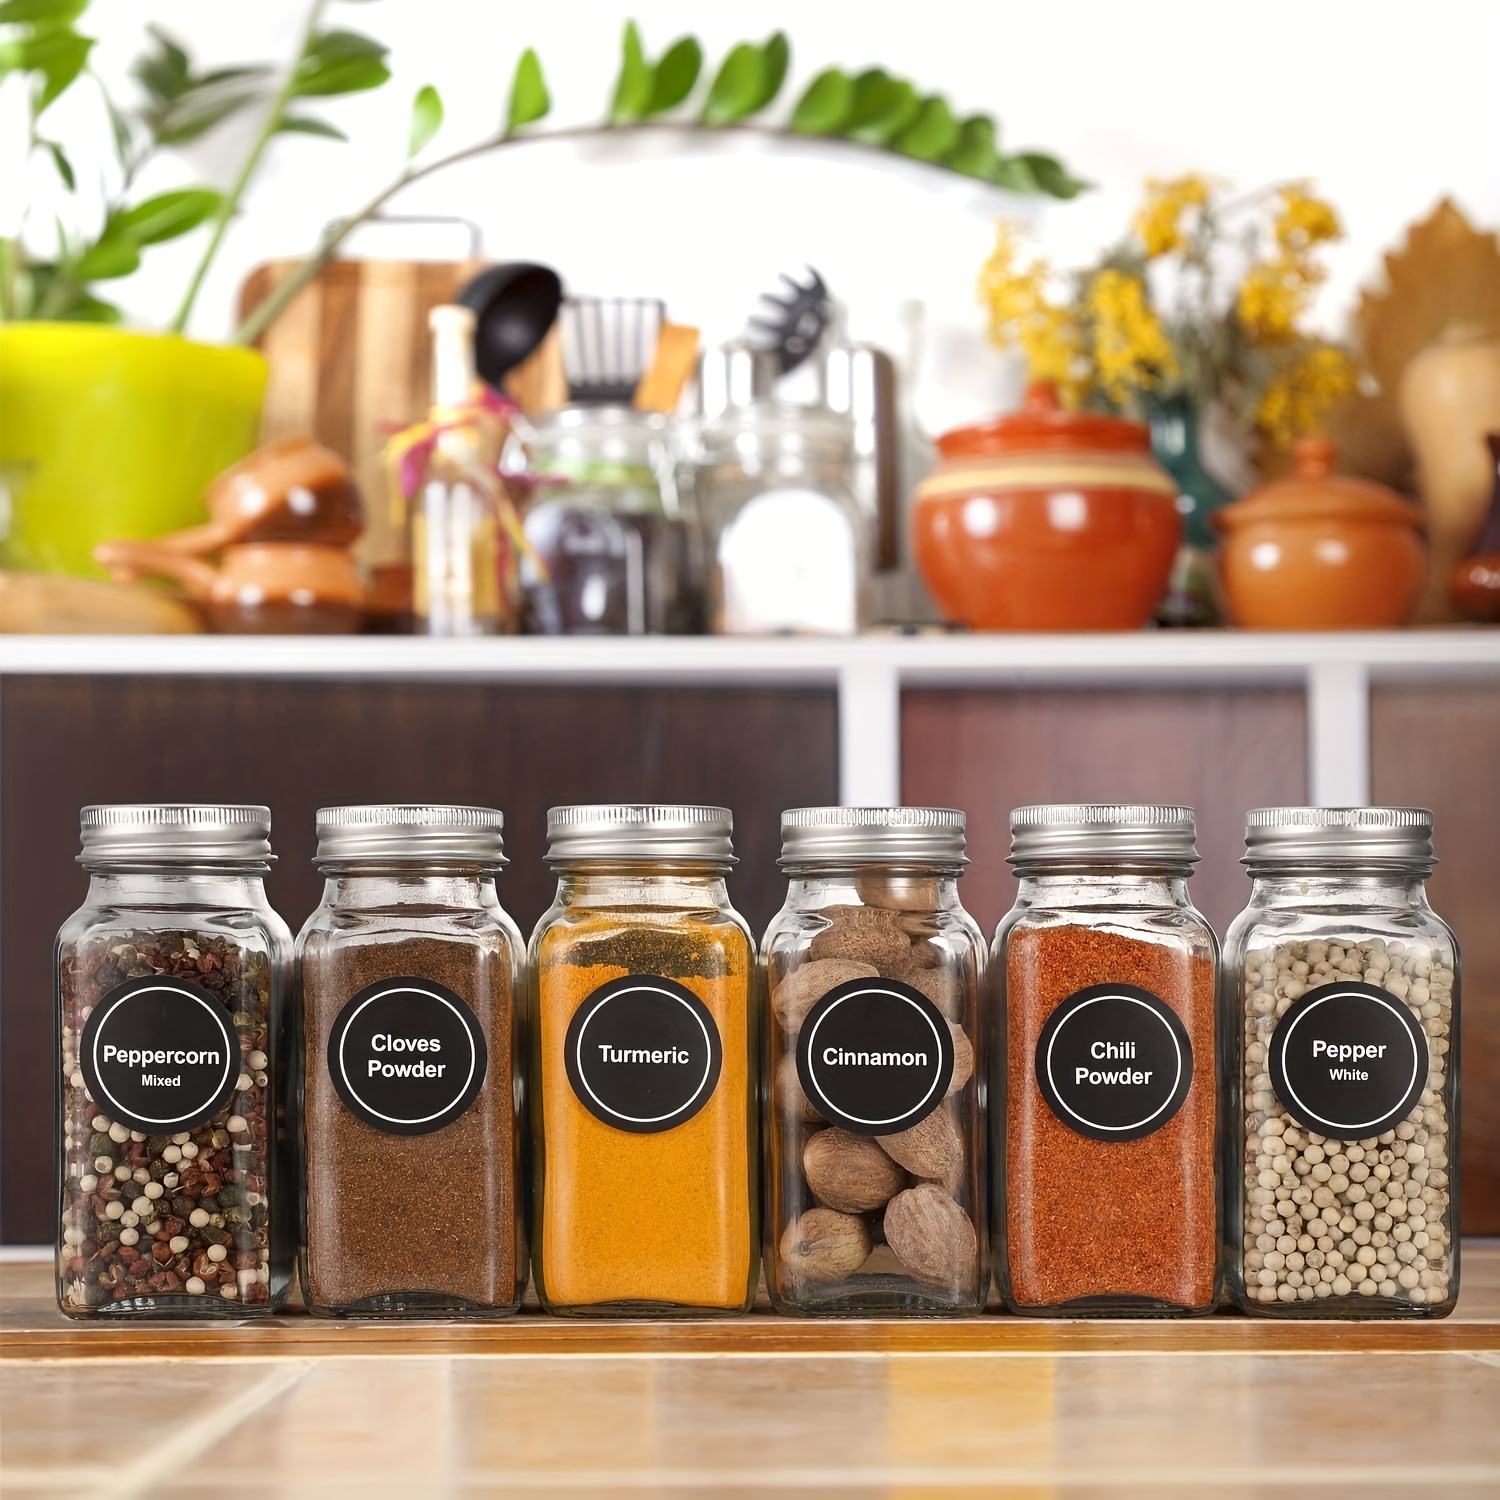 4 oz Square Glass Spice Jars